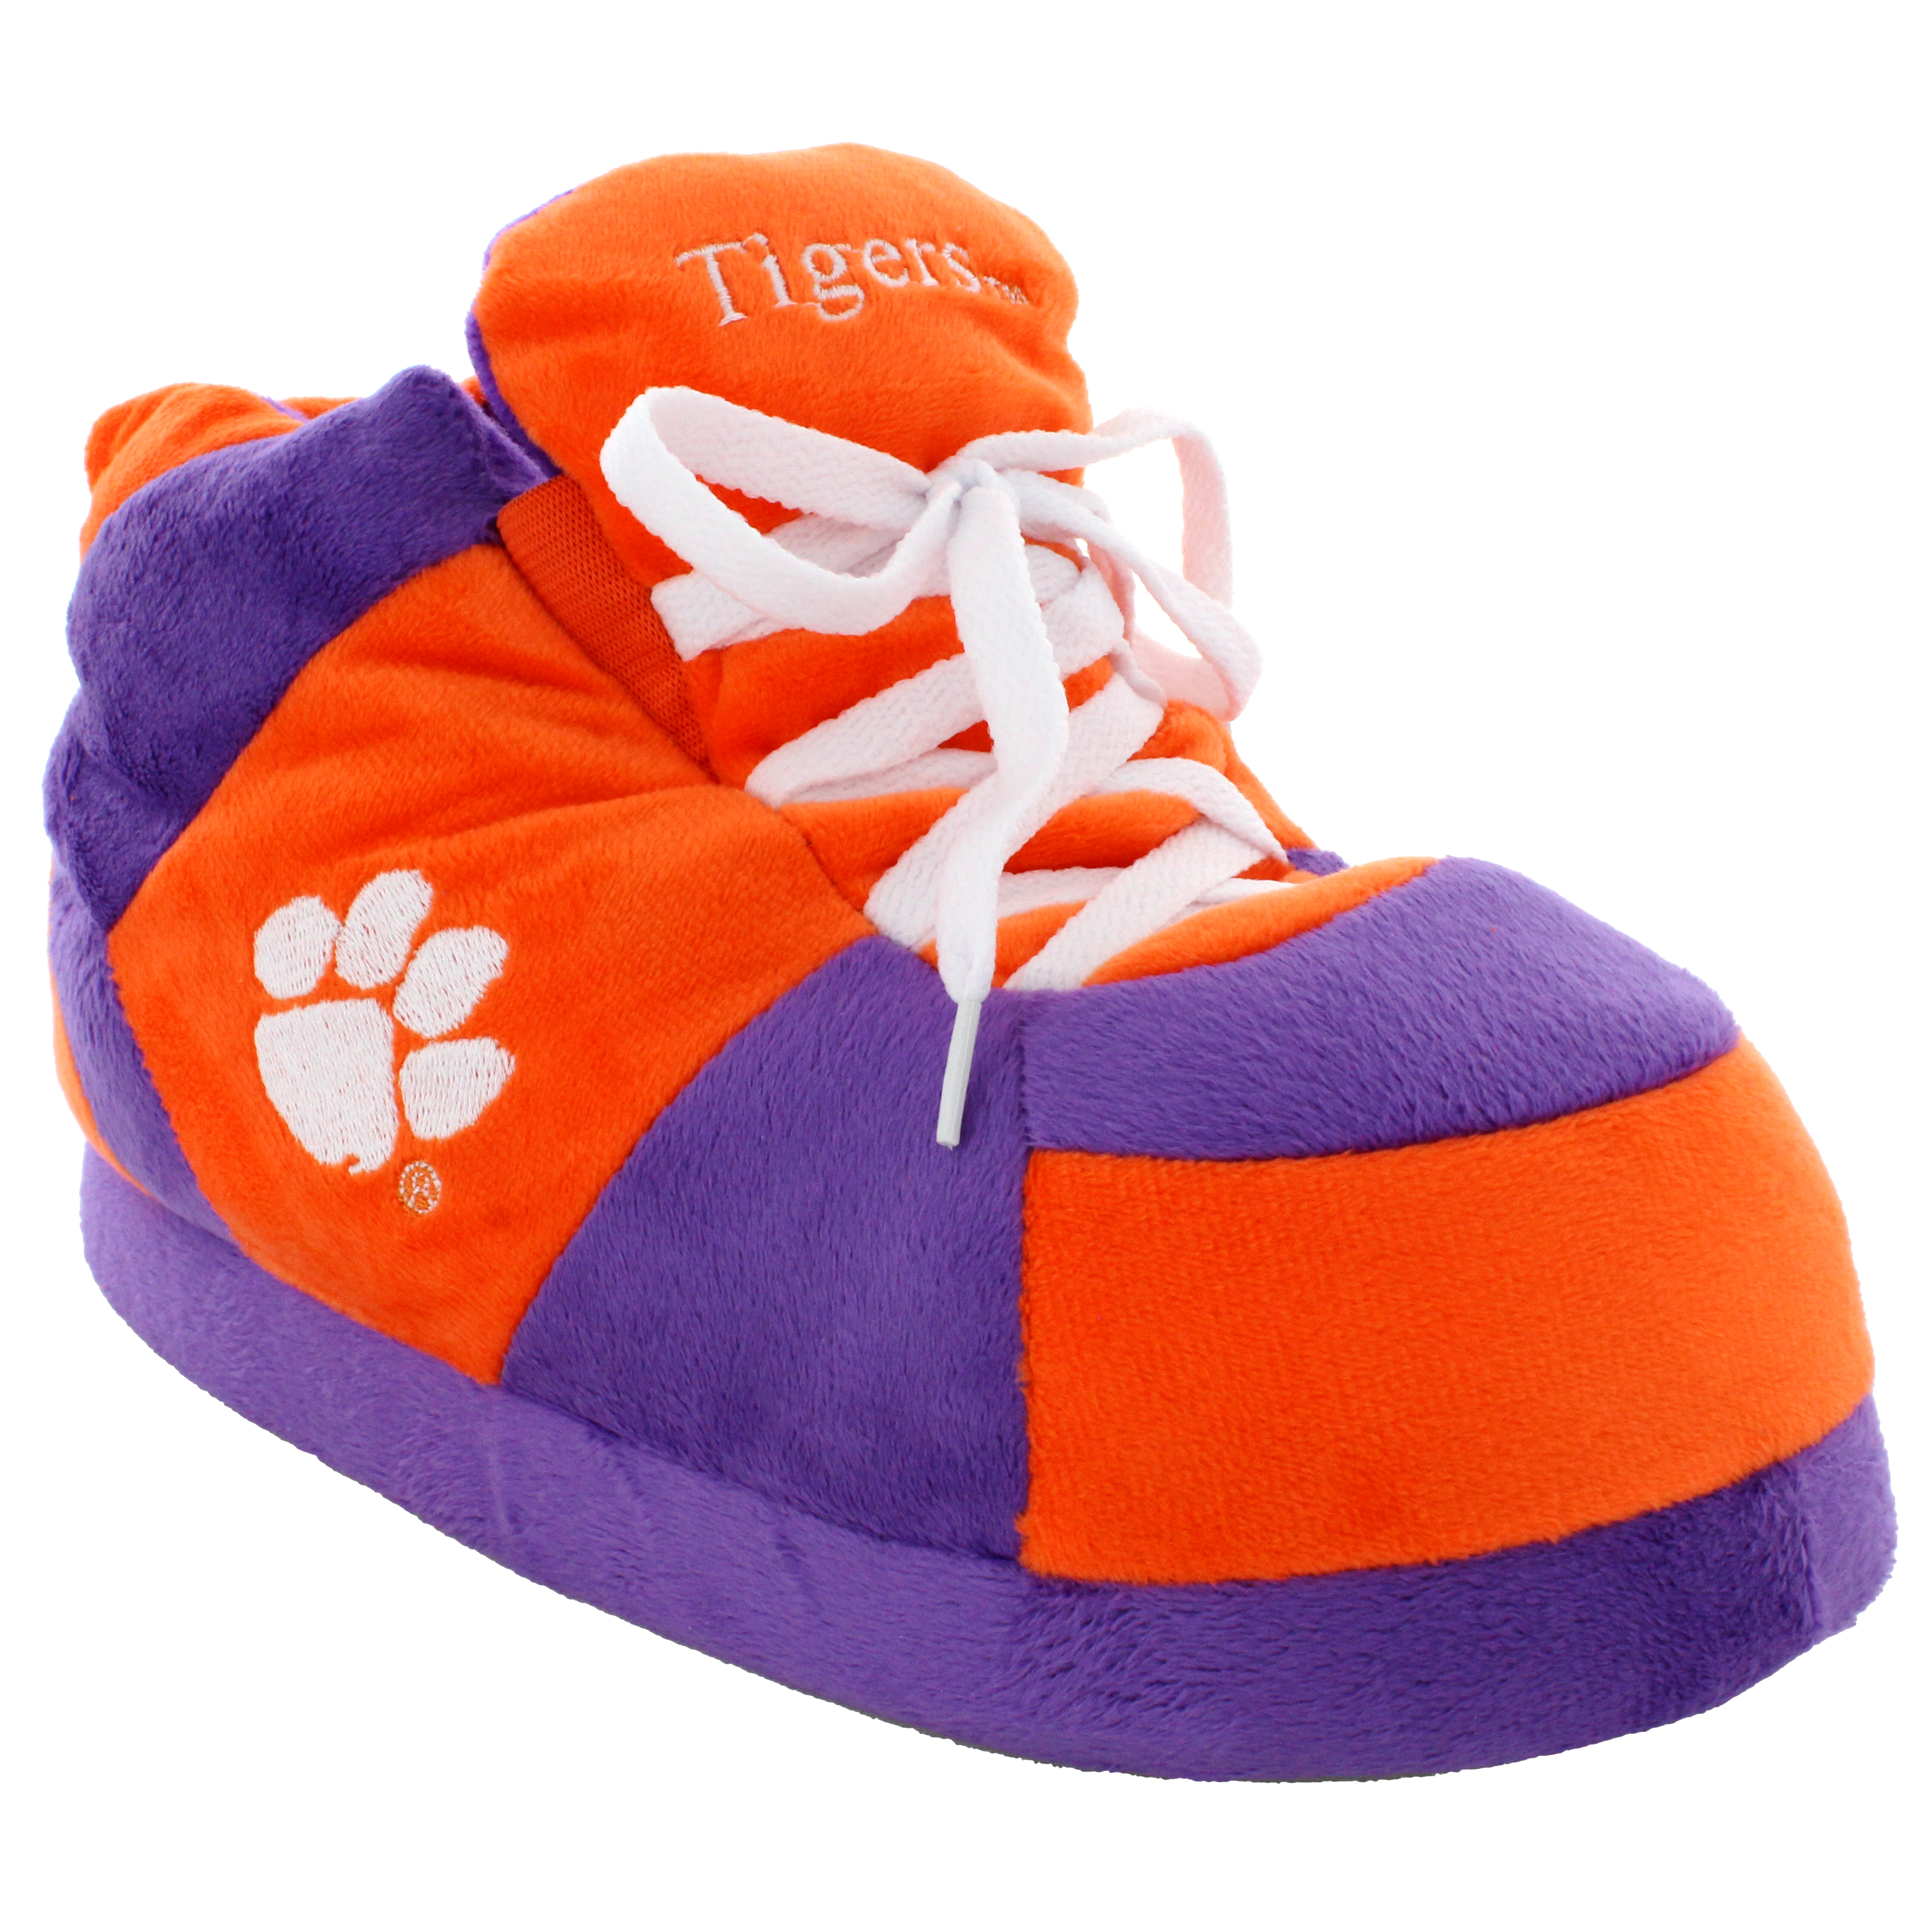 Clemson Tigers Original Comfy Feet Sneaker Slipper, X-Large - image 1 of 8